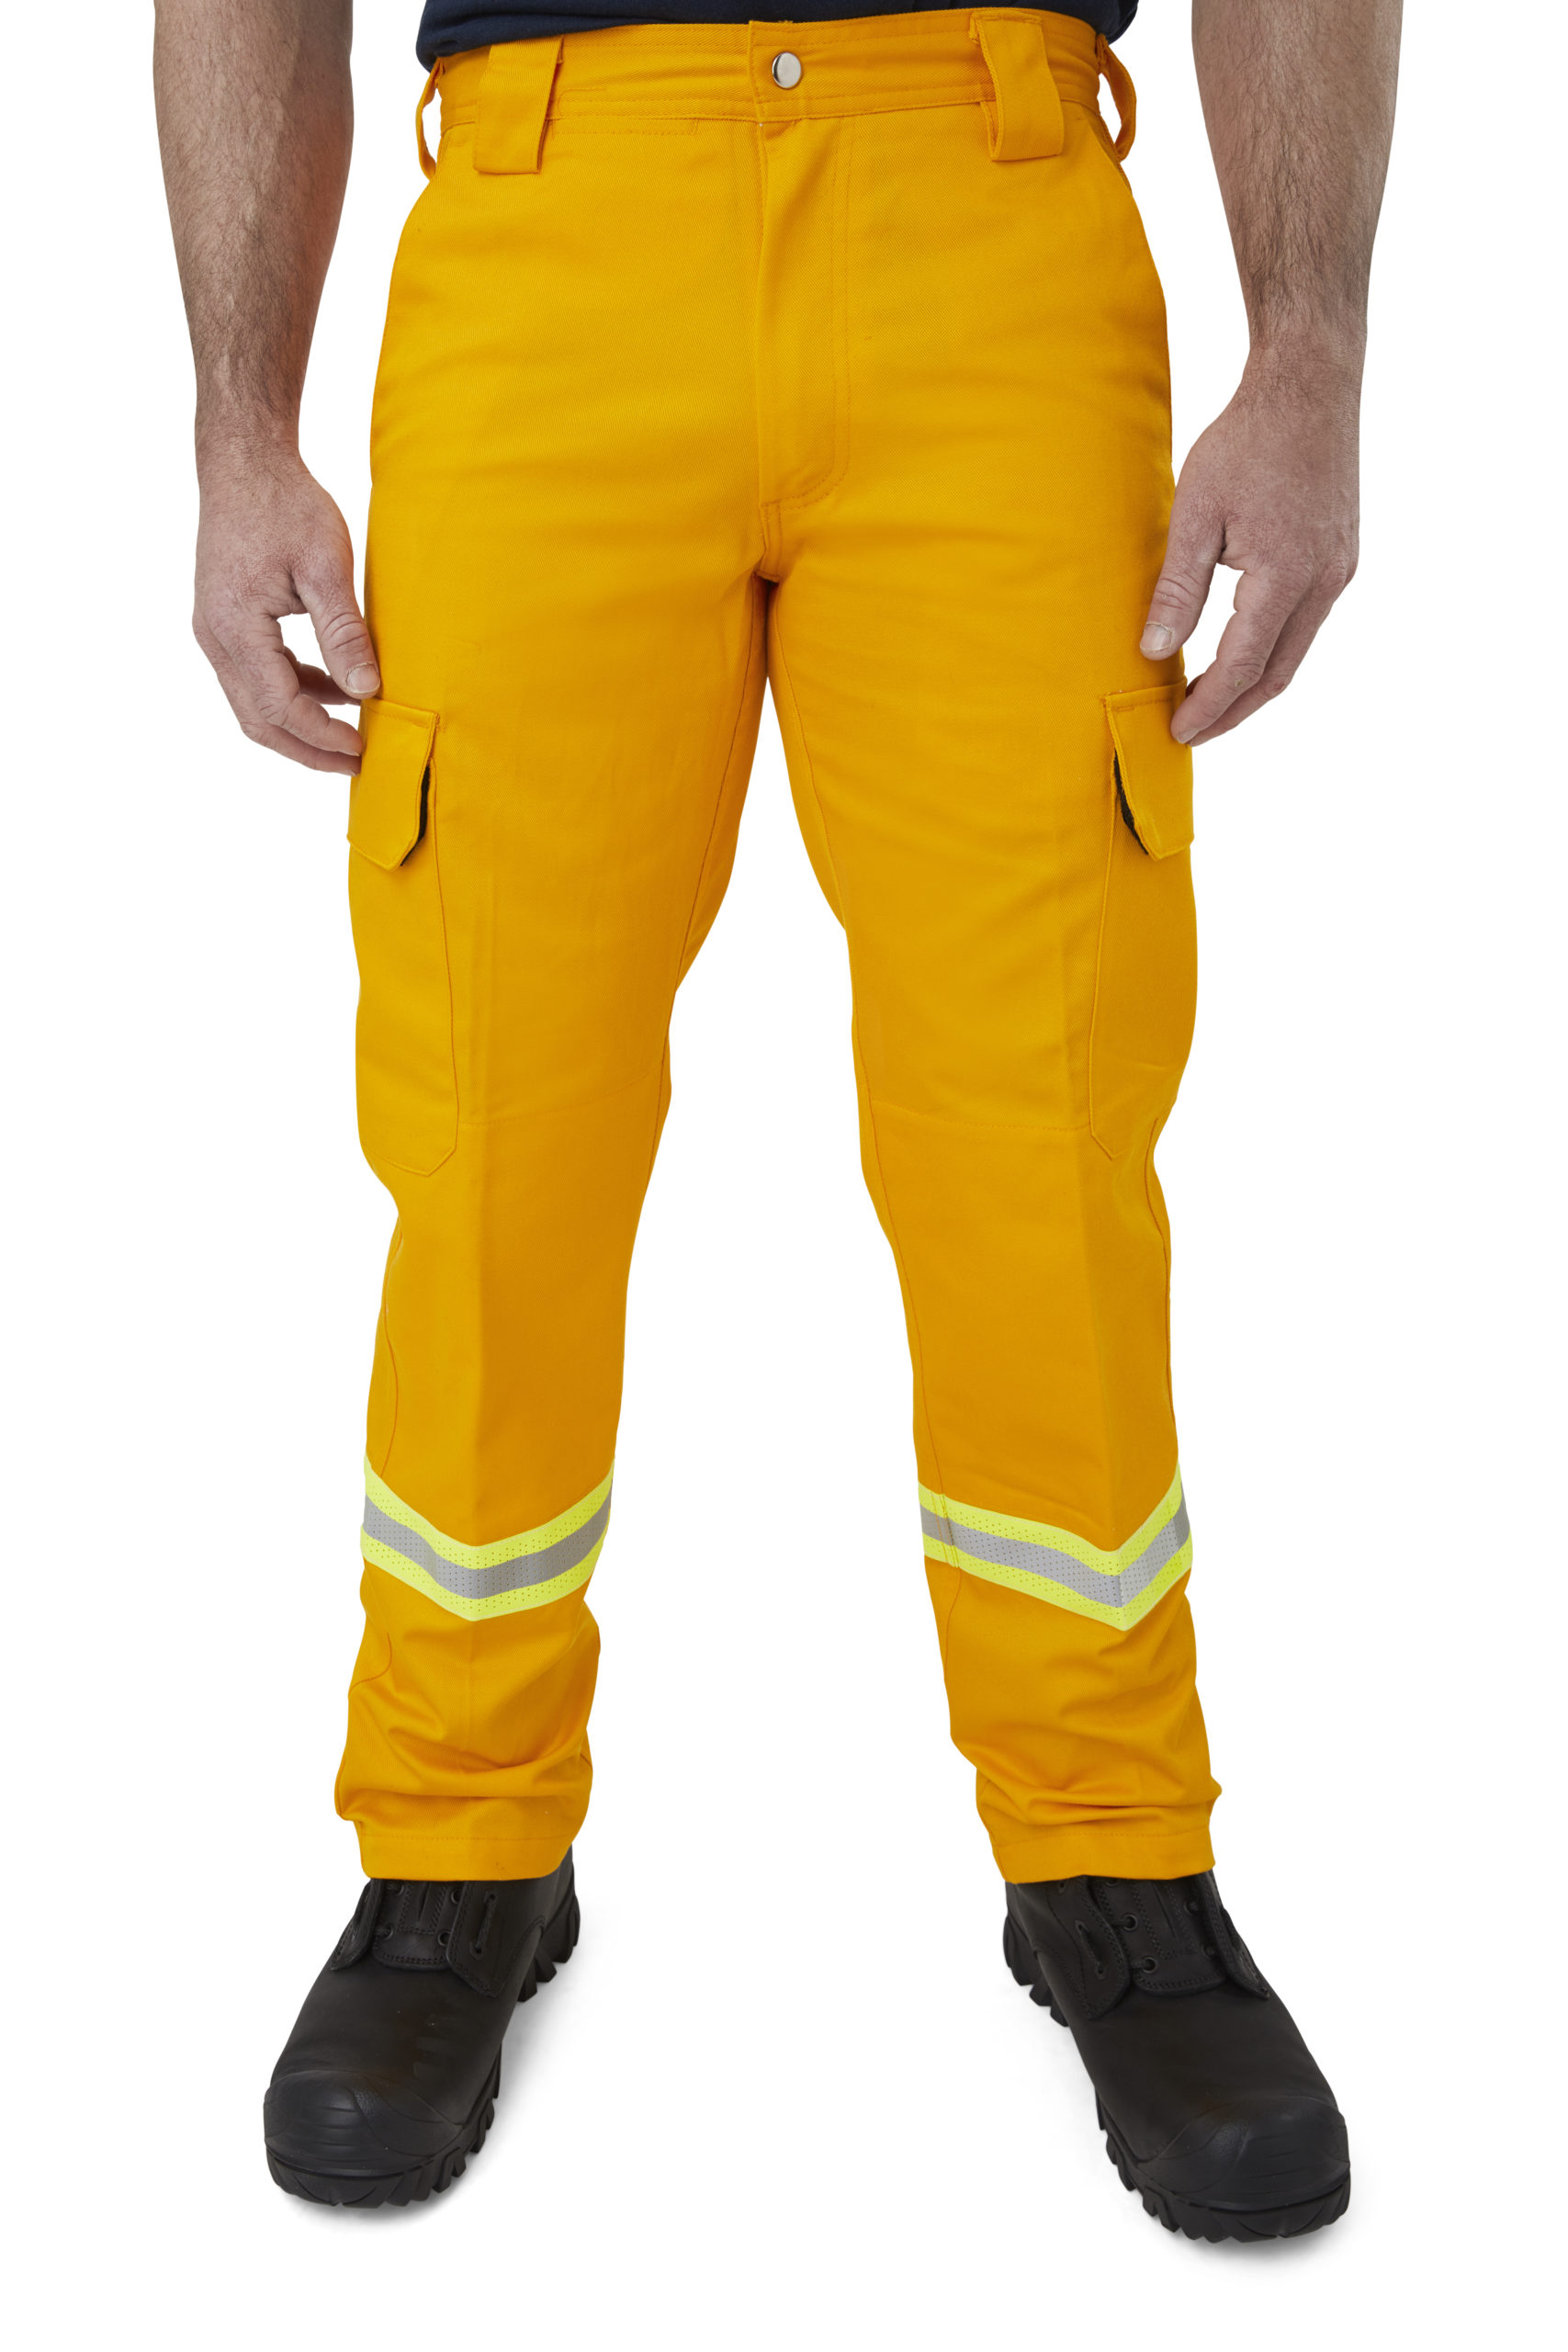 Wildland Firefighting Trouser FR Cotton | Parabellum International